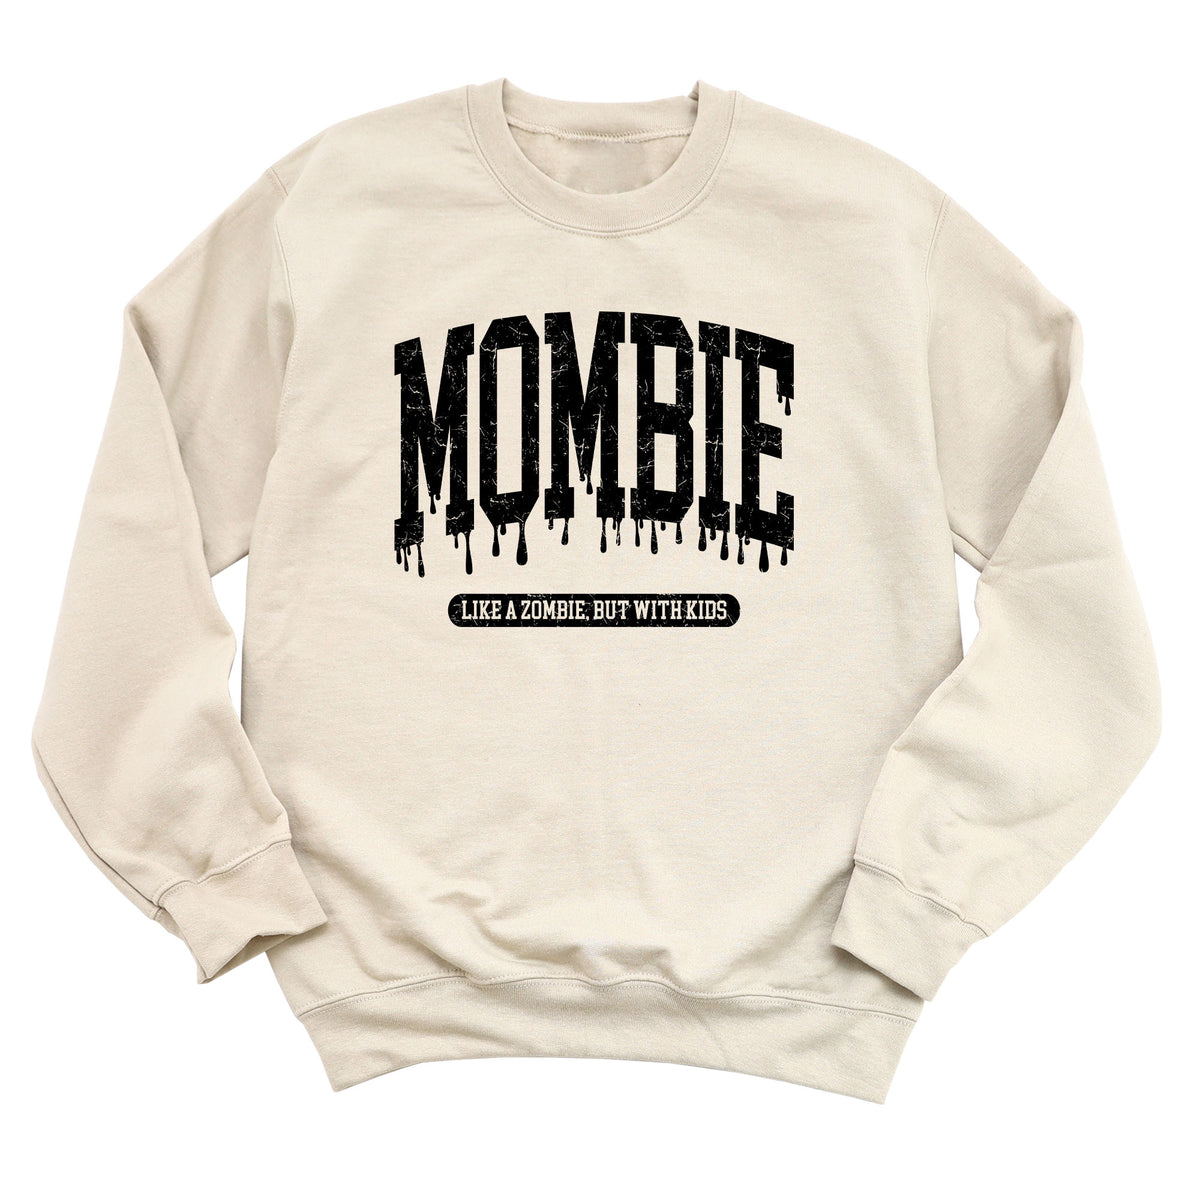 Mombie Like a Zombie, but with Kids Sweatshirt